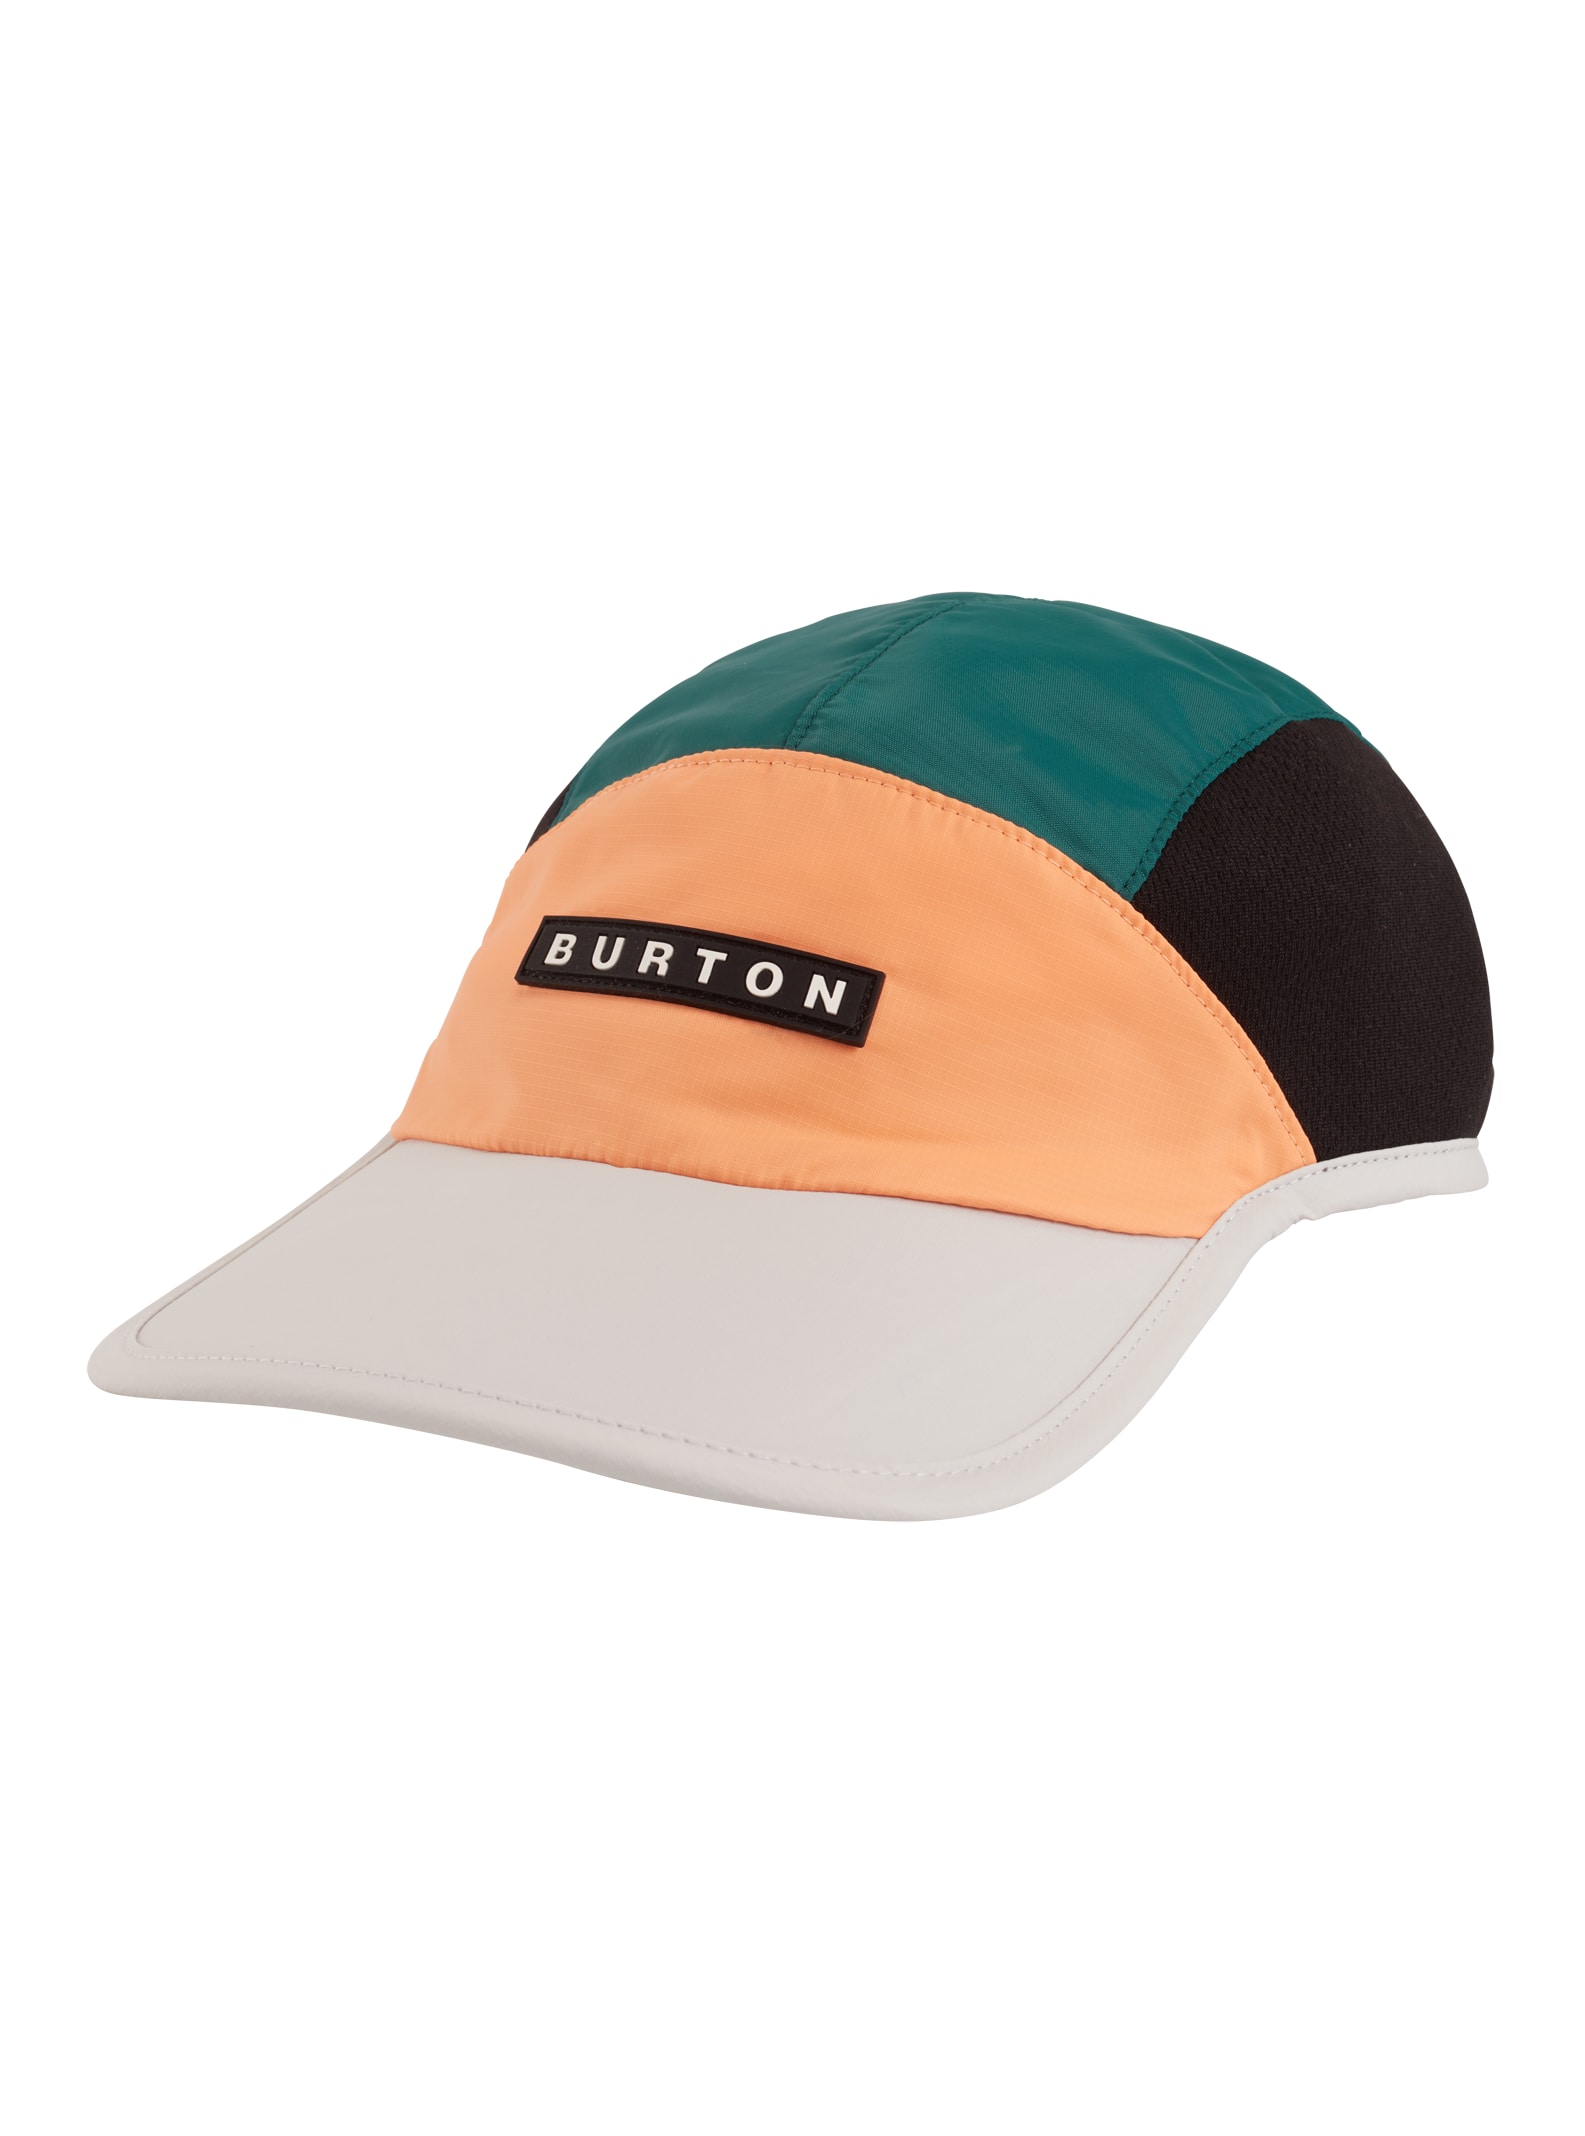 Burton Melter Hat | Burton.com Spring 2021 JP